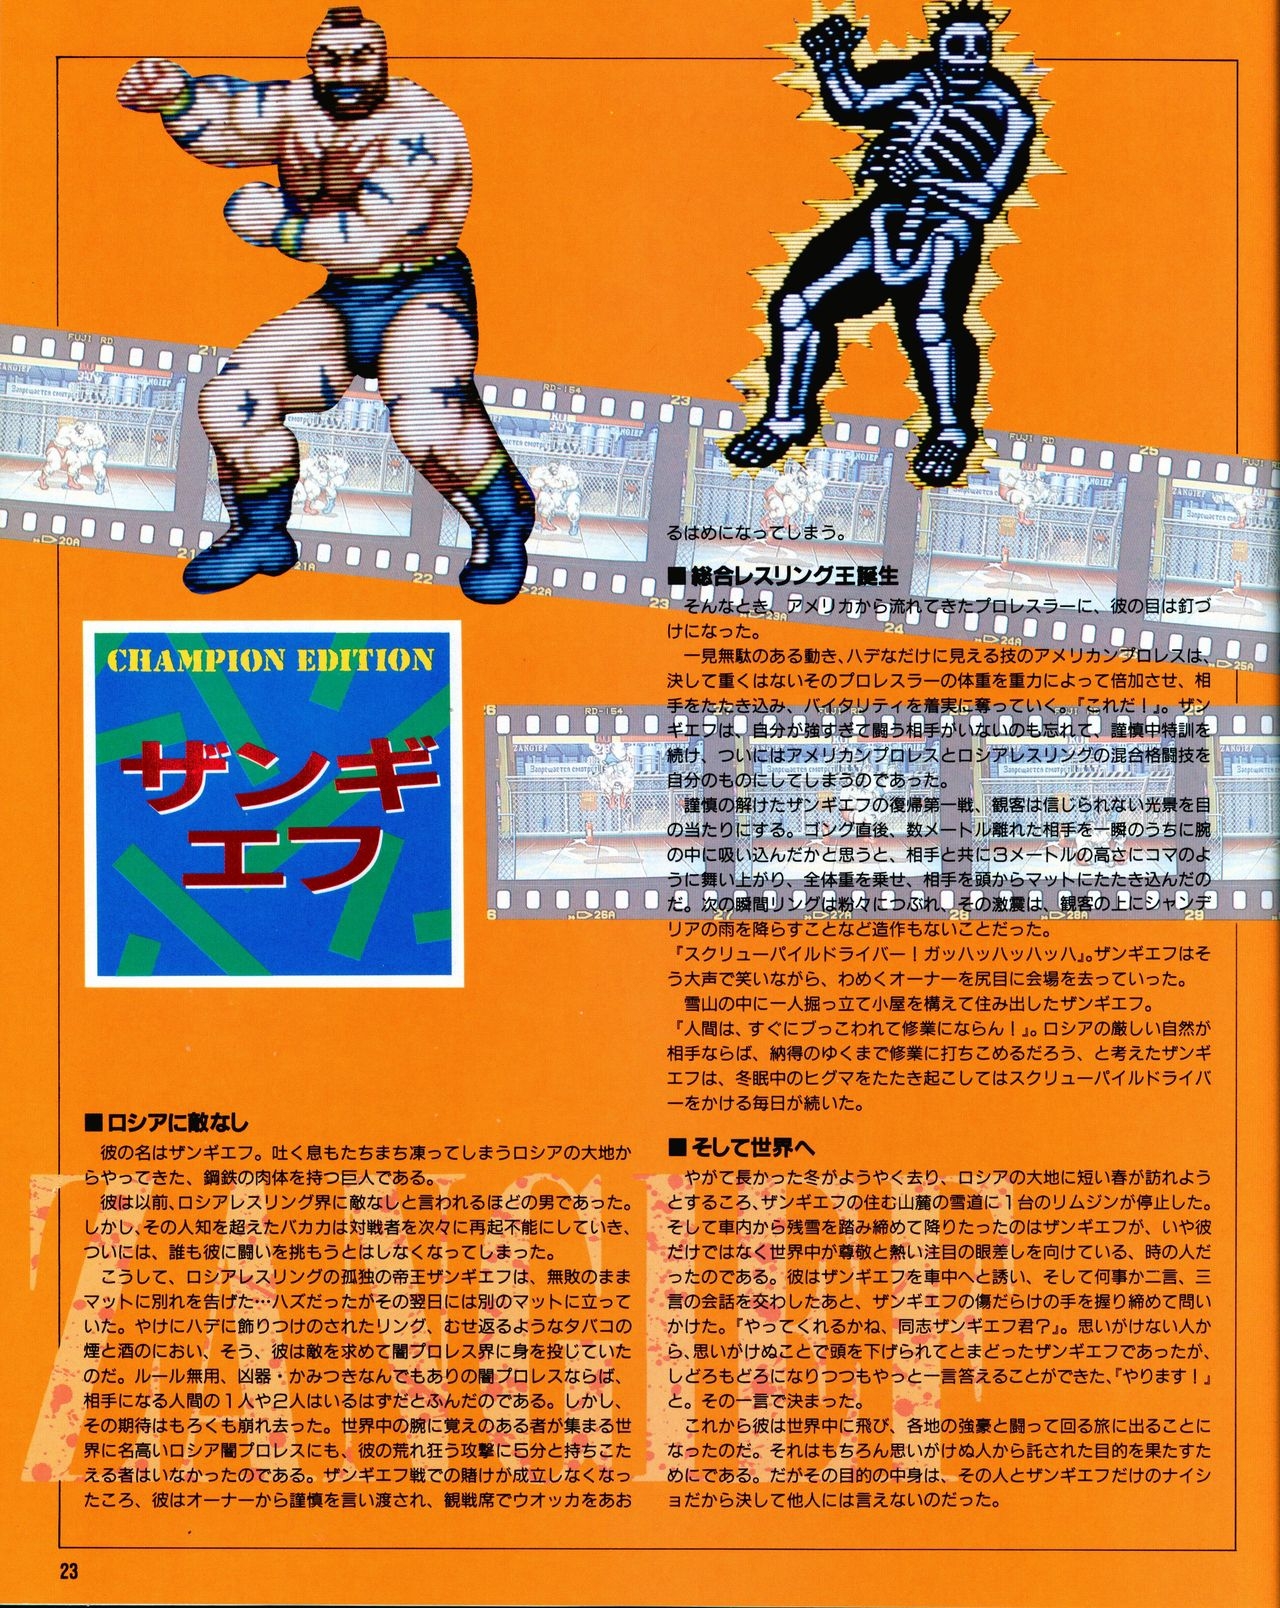 Street Fighter II Dash - Gamest special issue 77 24